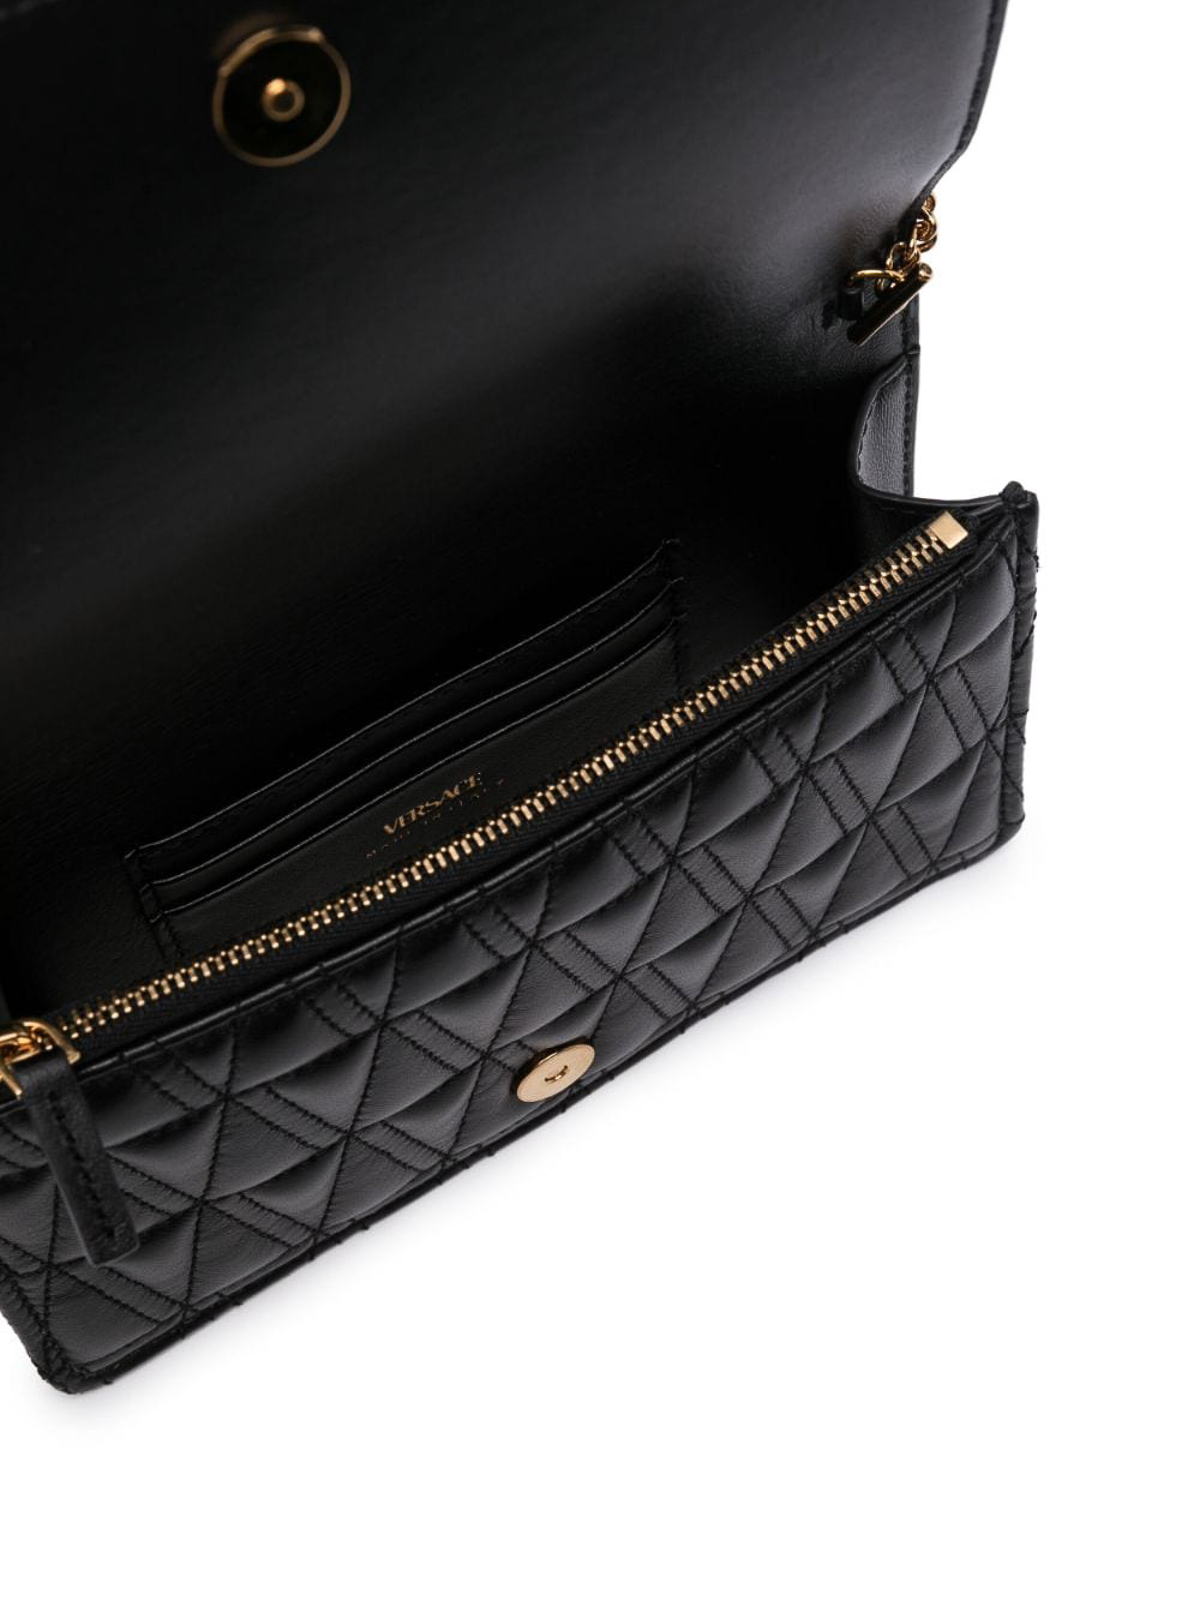 Versace, Bags, Versace Virtus Quilted Mini Bag